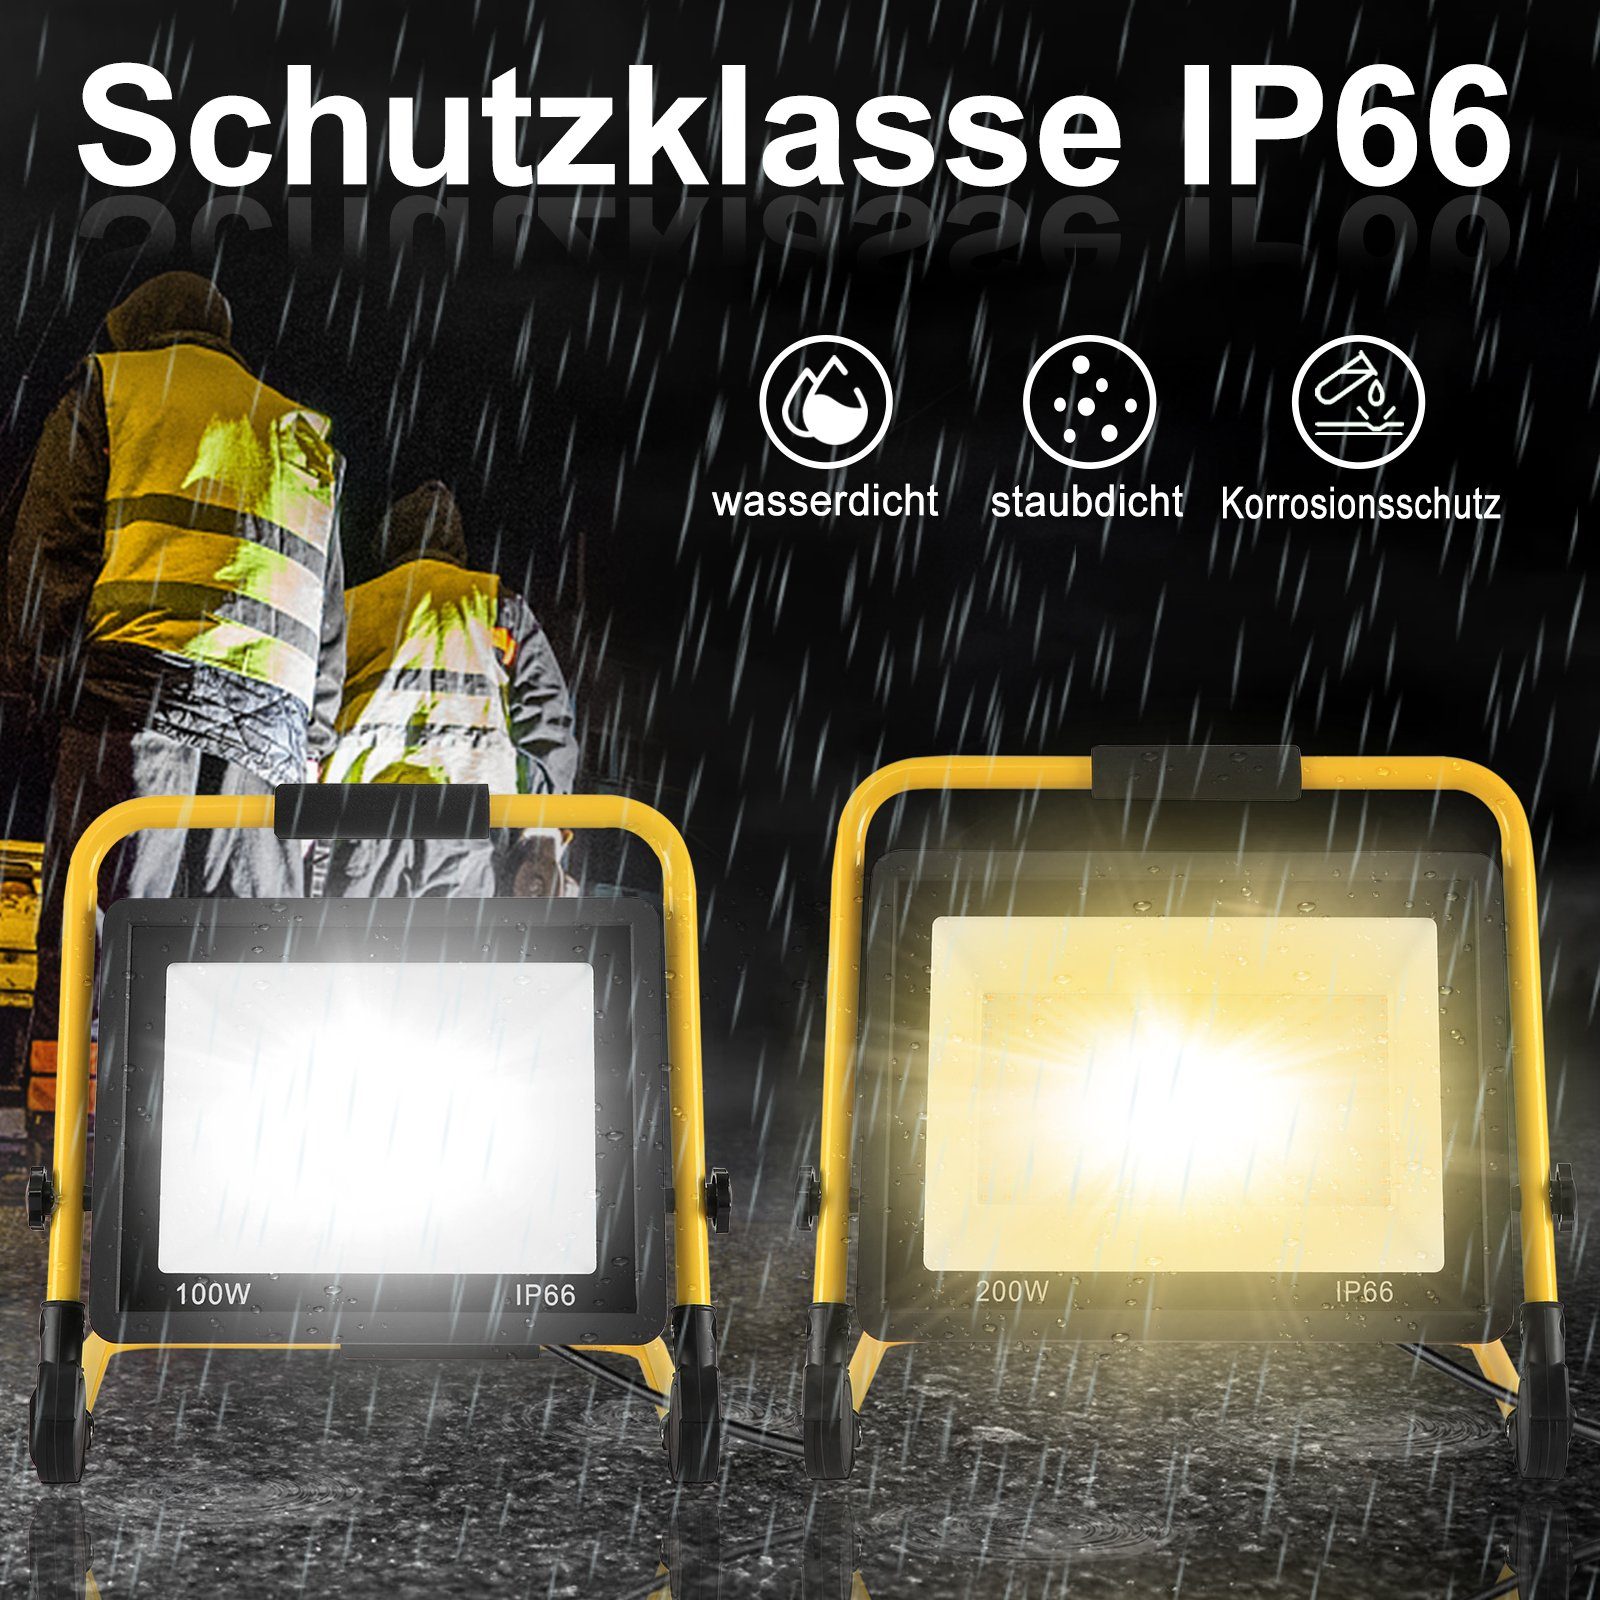 UISEBRT LED Baustrahler Strahler LED Fluter IP66 Kaltweiß Arbeitsscheinwerfer 200W